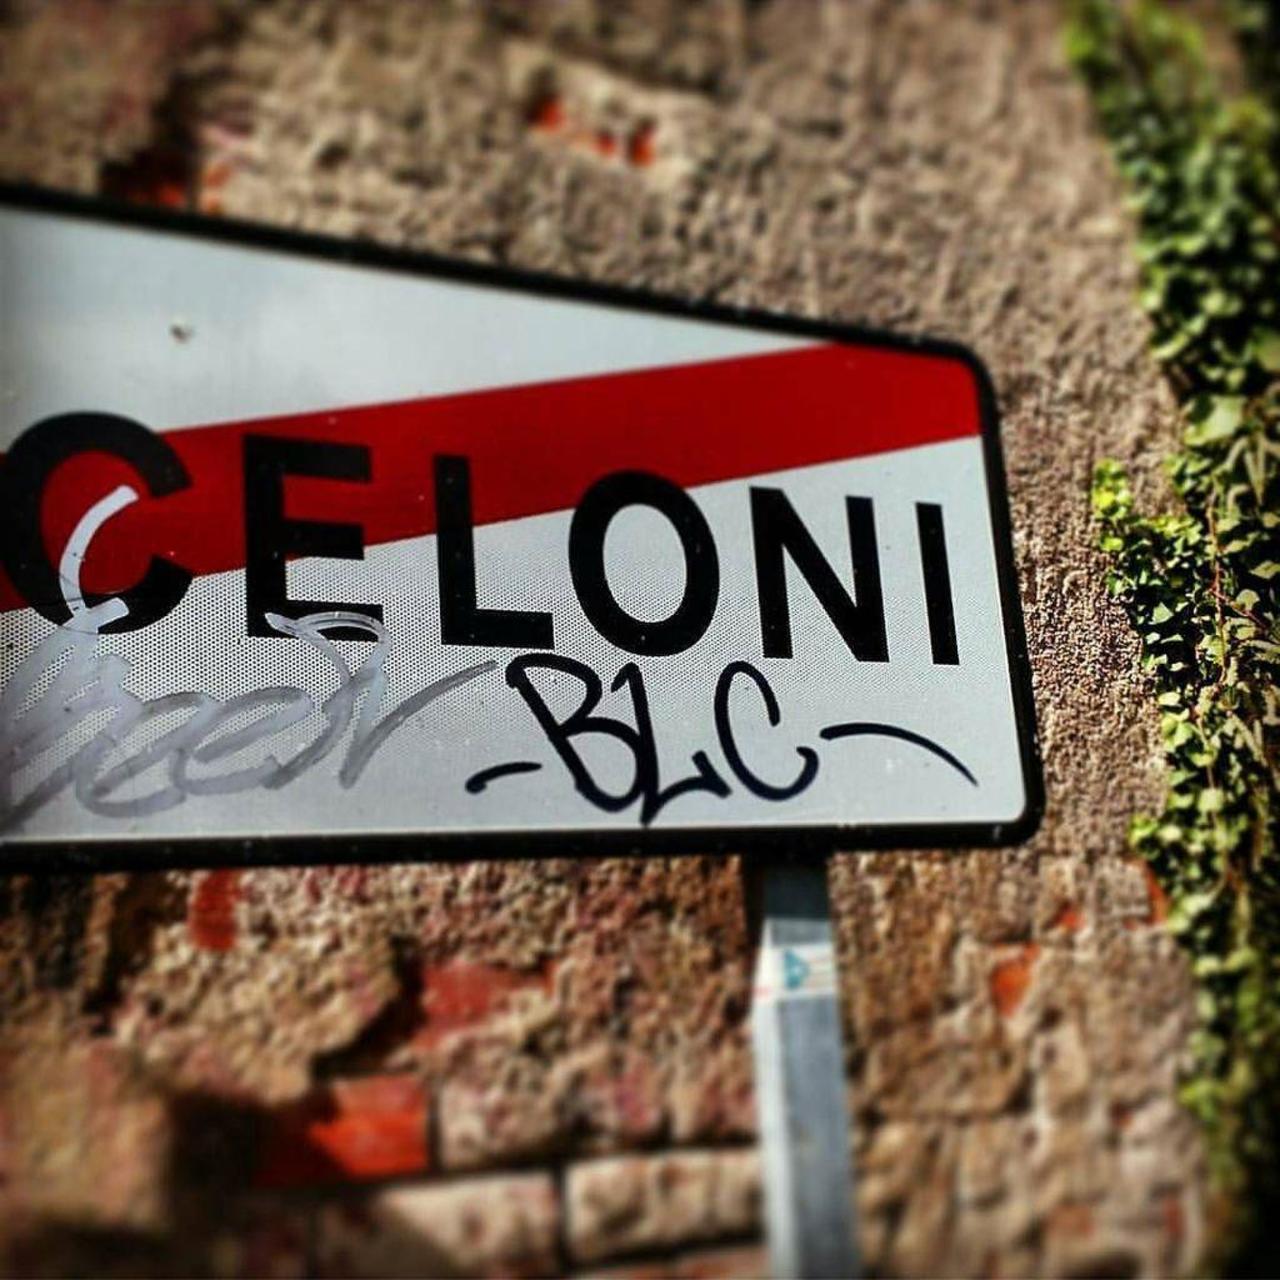 via #bcnlegends "http://bit.ly/1L13Hg5" #graffiti #streetart http://t.co/RaZTciynIq